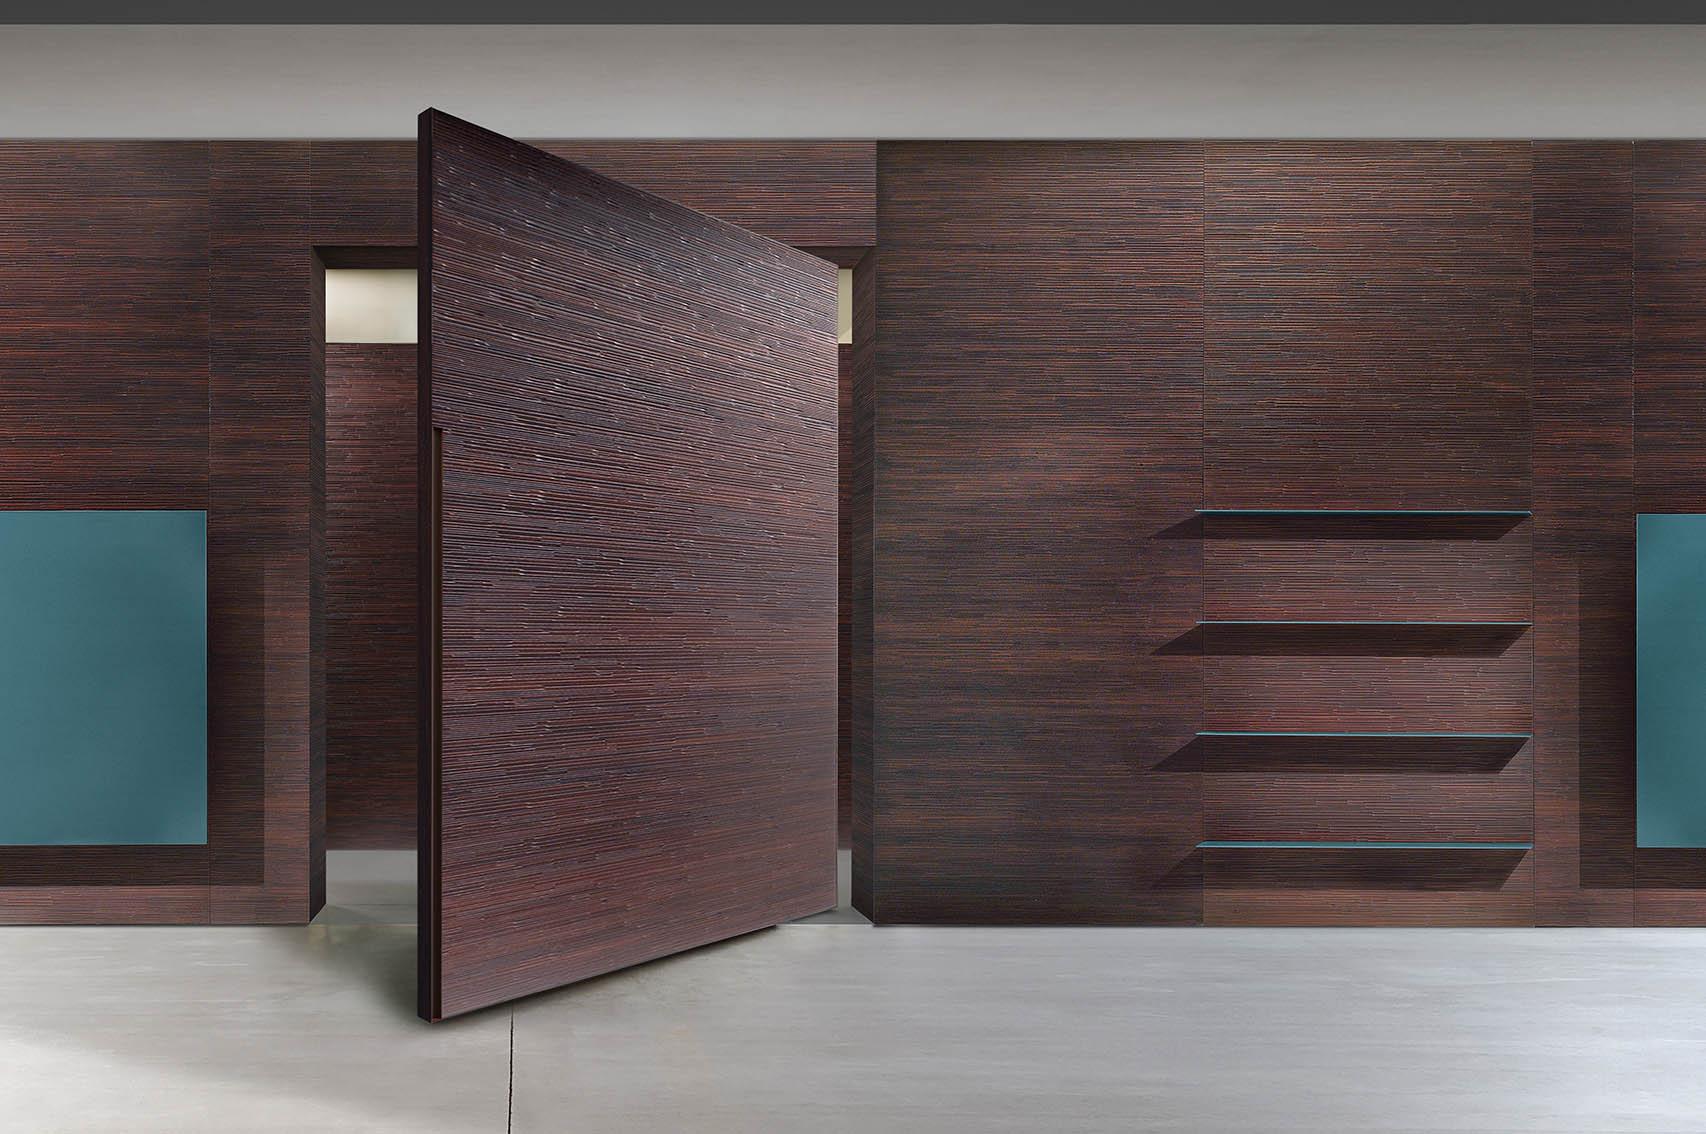 Laurameroni luxury modern integrated doors for a bespoke artisanal interior design and decor